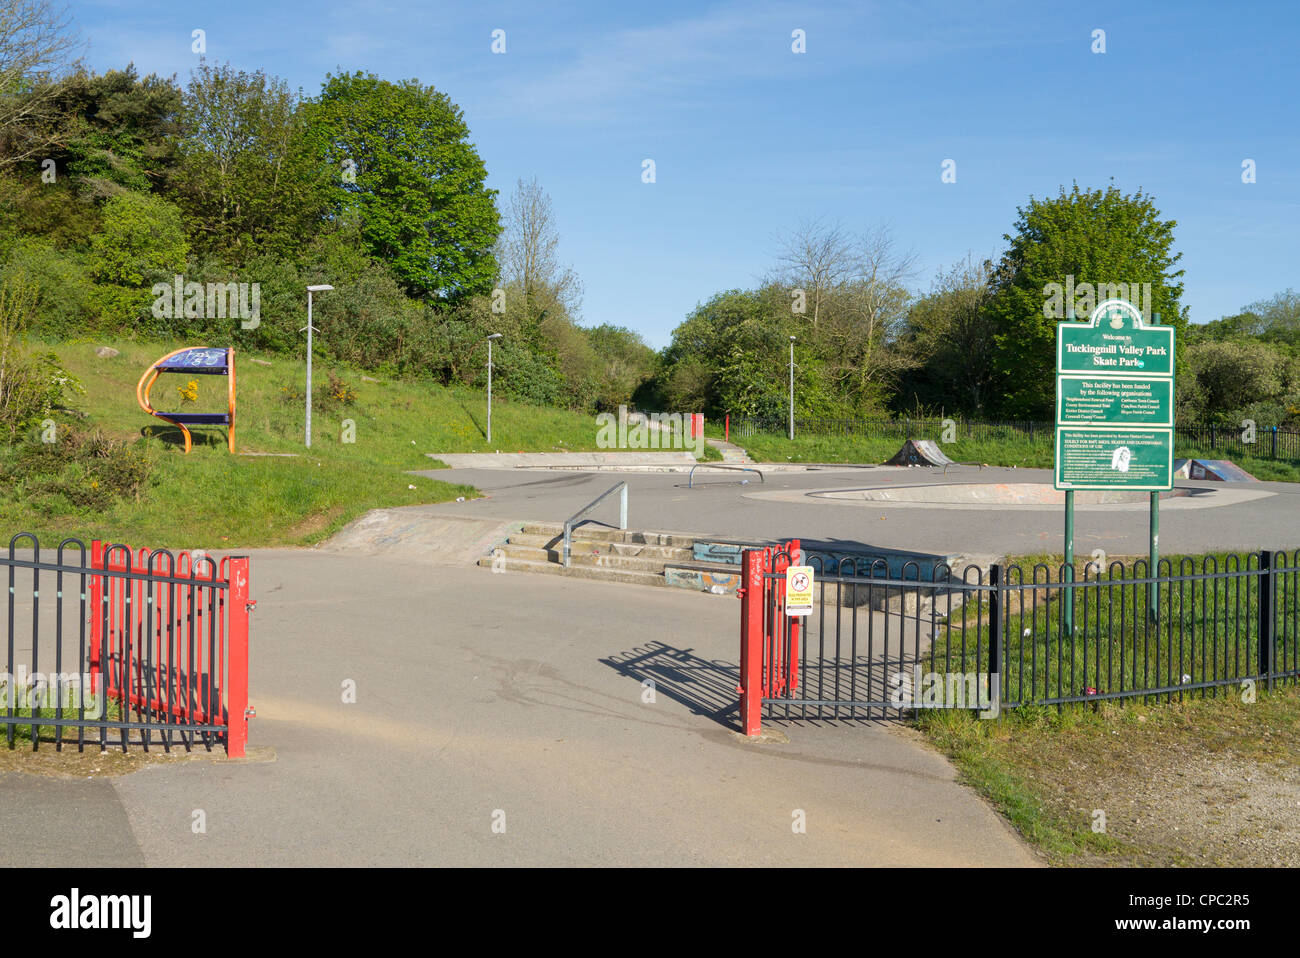 Tuckingmill Valley Park Skate Park, Camborne Cornwall UK. Stock Photo